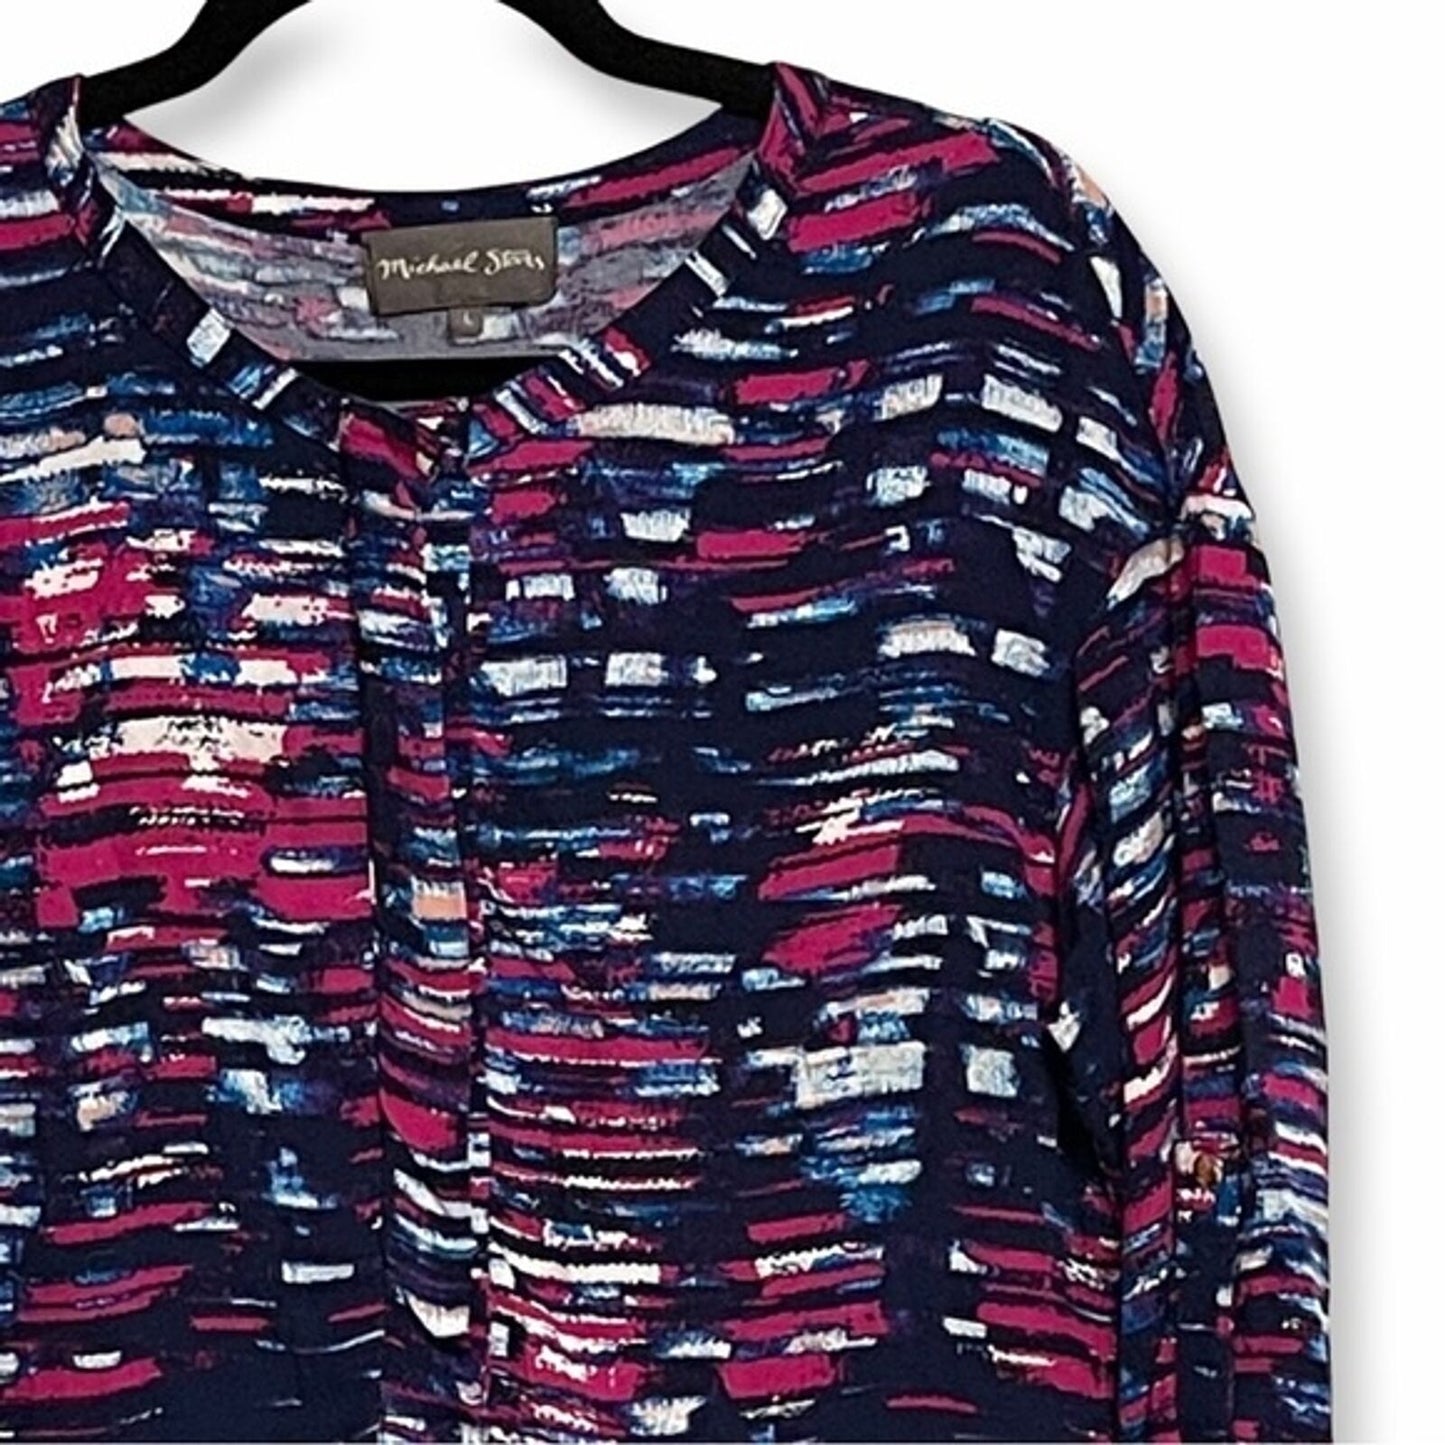 Michael Stars Barcelona Crepe Print Colorful Abstract Shirt Dress Large